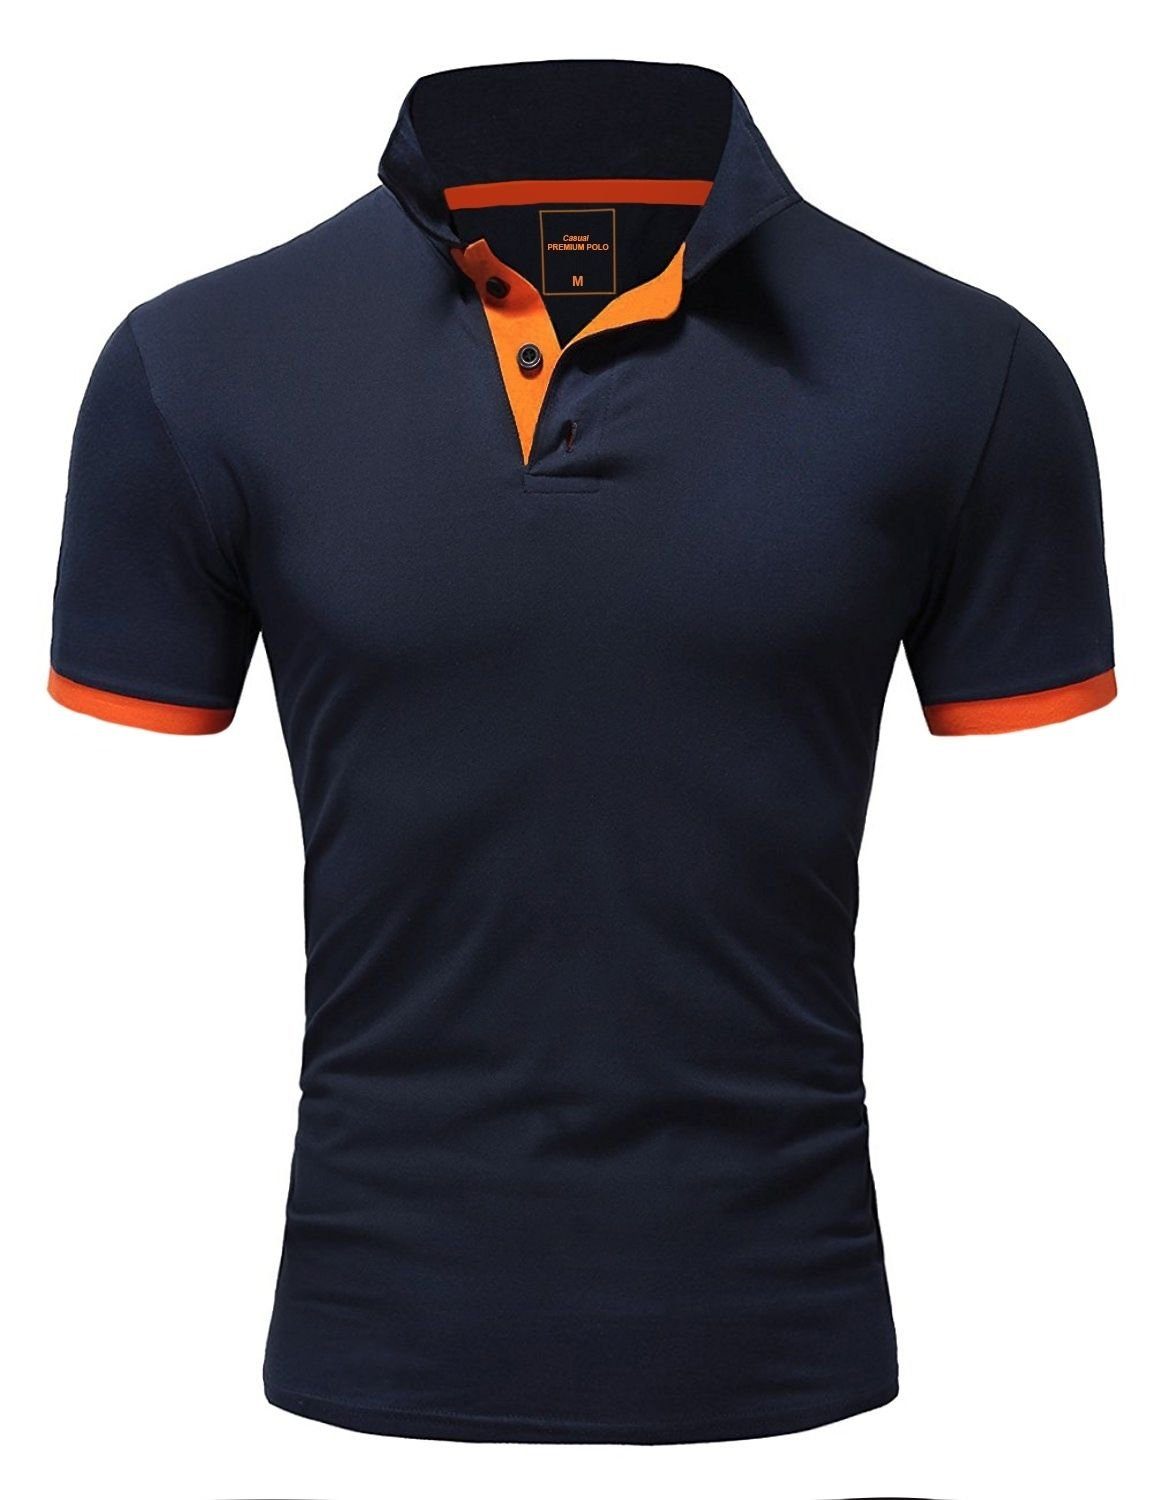 mit BASE behype kontrastfarbigen Details dunkelblau-orange Poloshirt